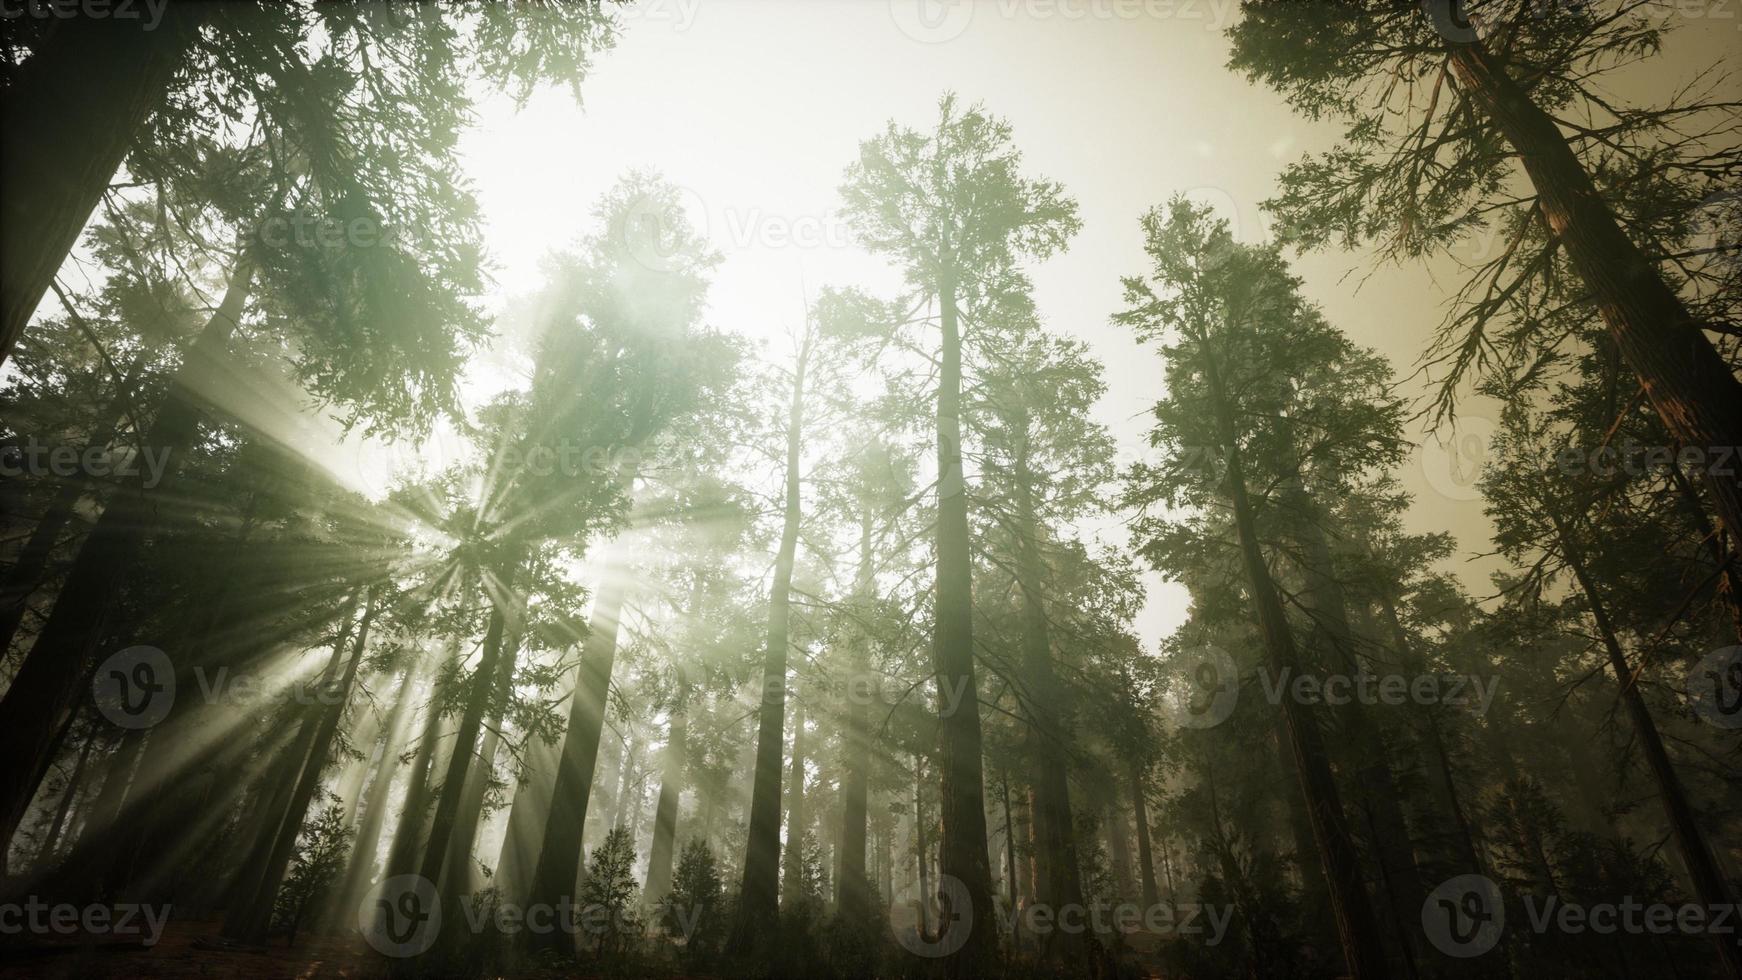 Redwood-Wald neblige Sonnenunterganglandschaft foto